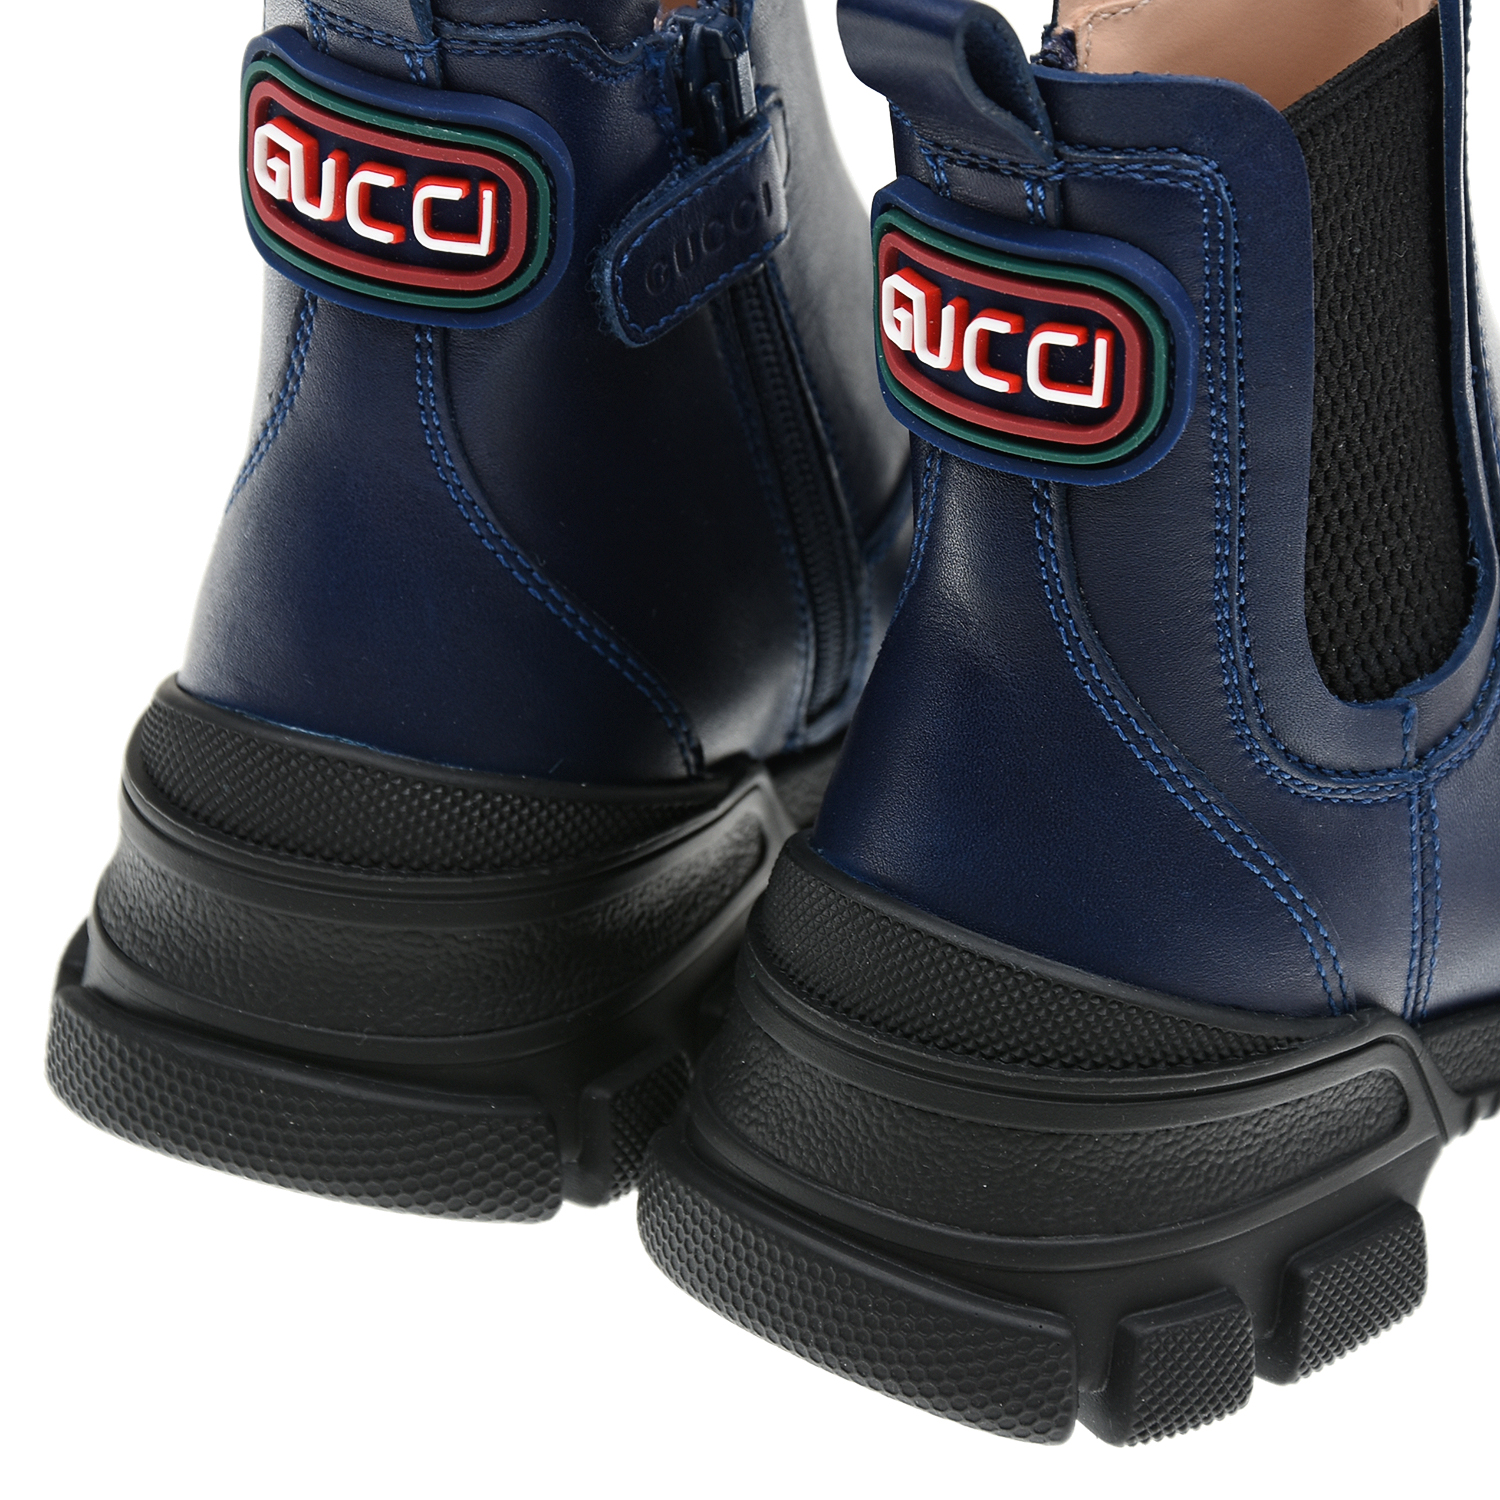 Синие ботинки на массивной подошве GUCCI детские, размер 27, цвет синий - фото 8